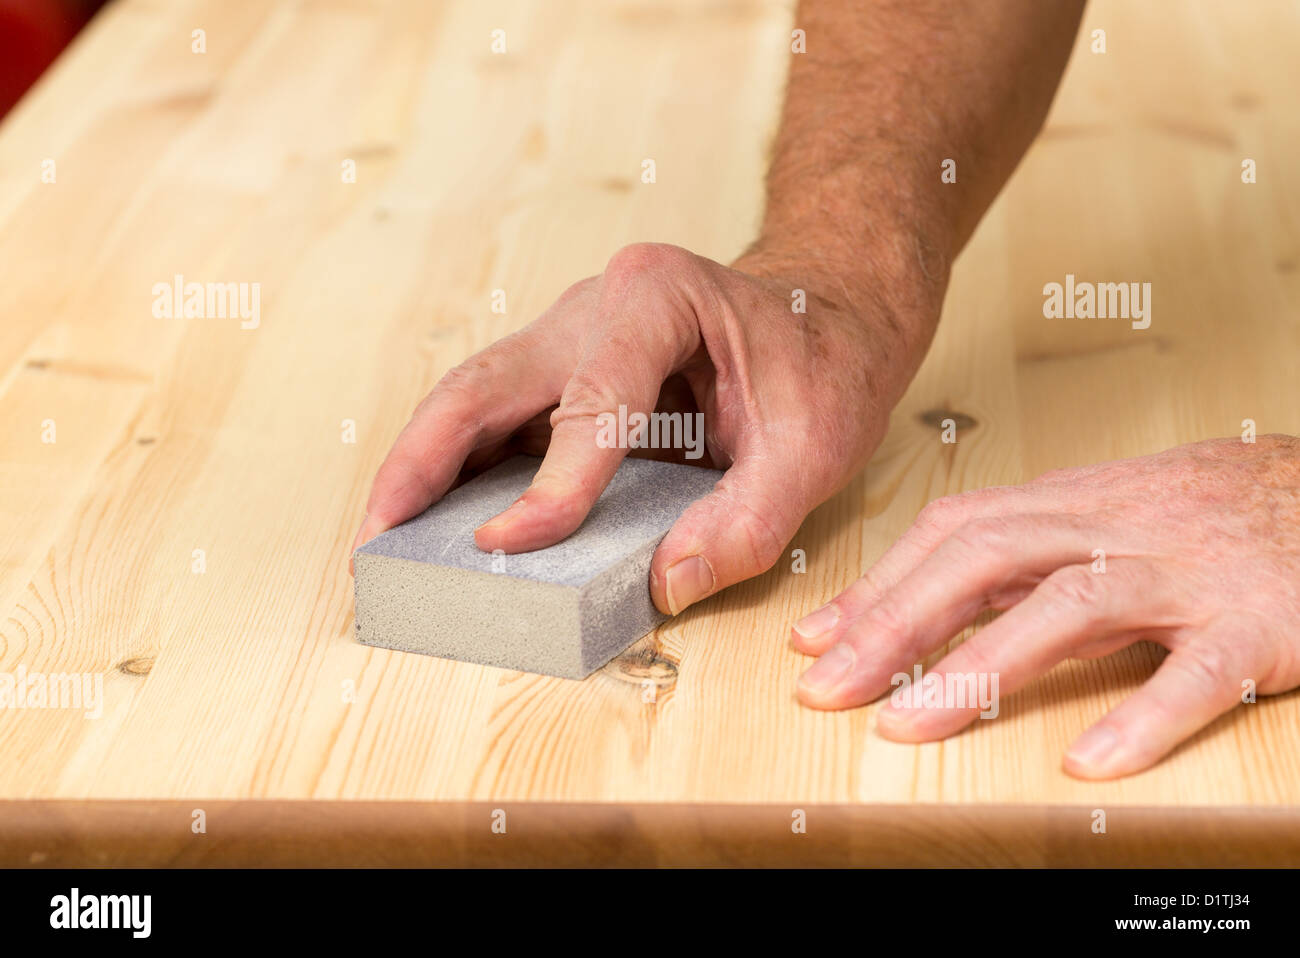 Man holding sanding block on pine floor or table sanding surface Stock Photo